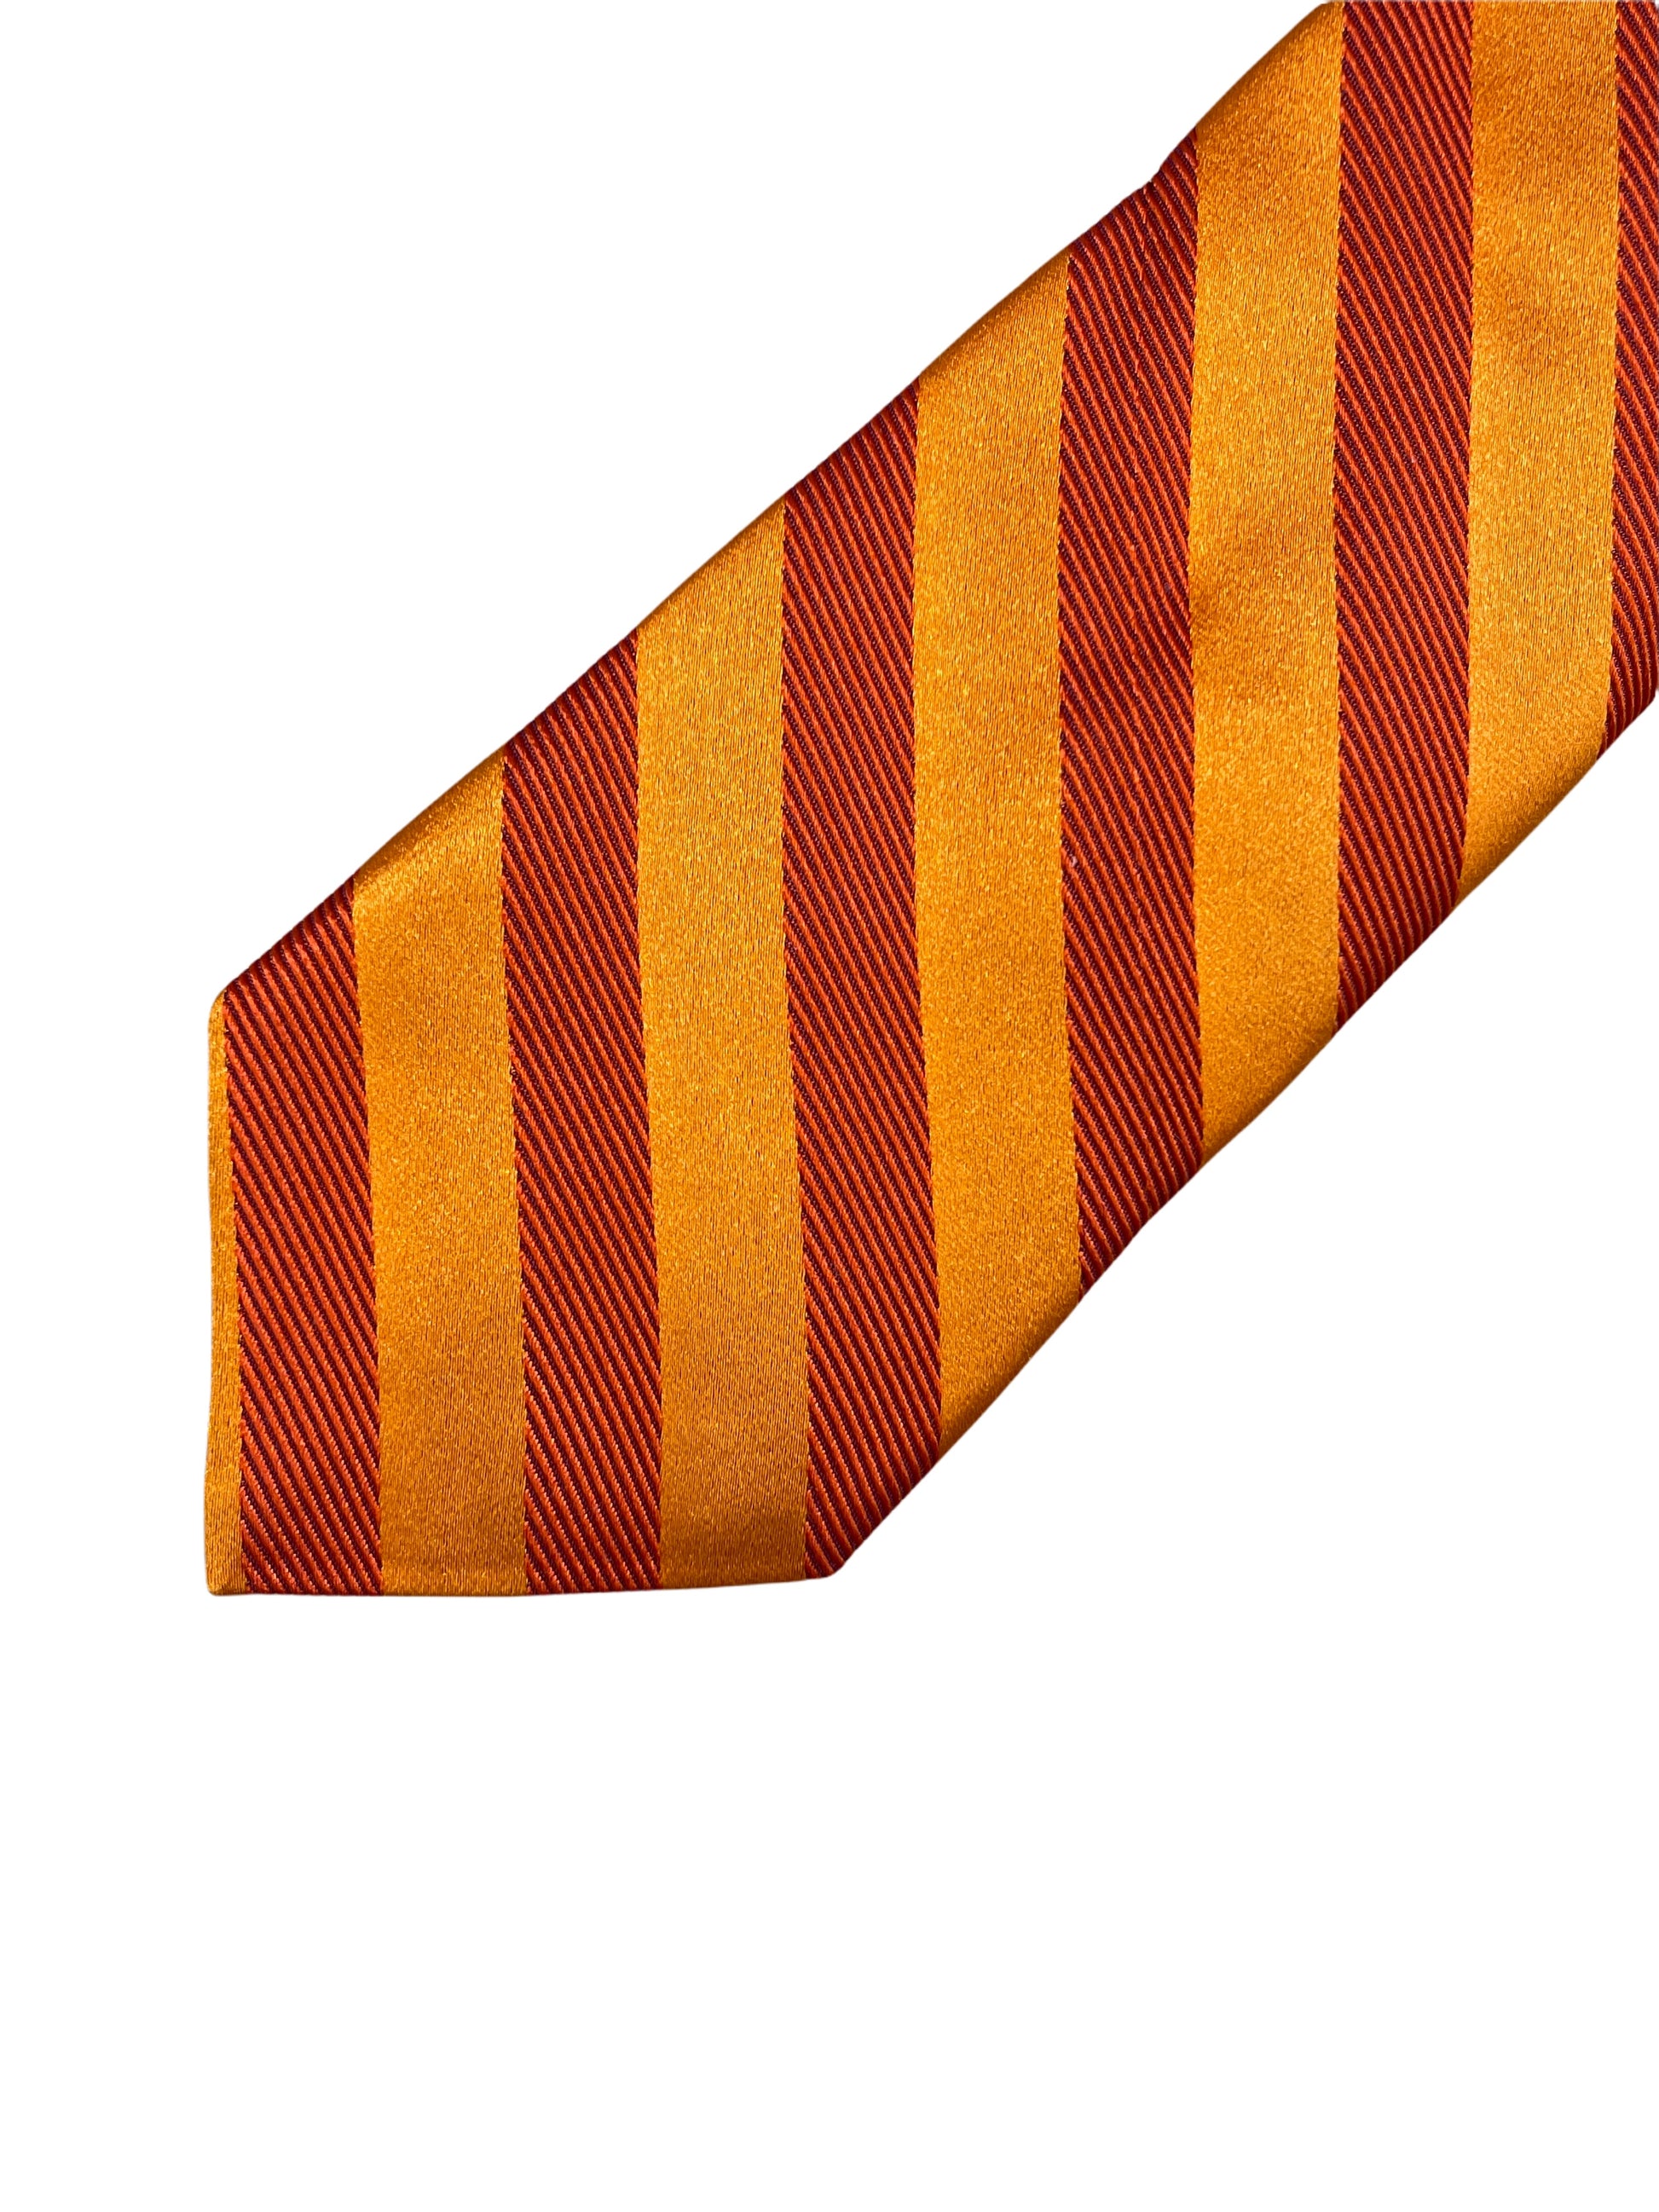 Ted baket orange striped tie